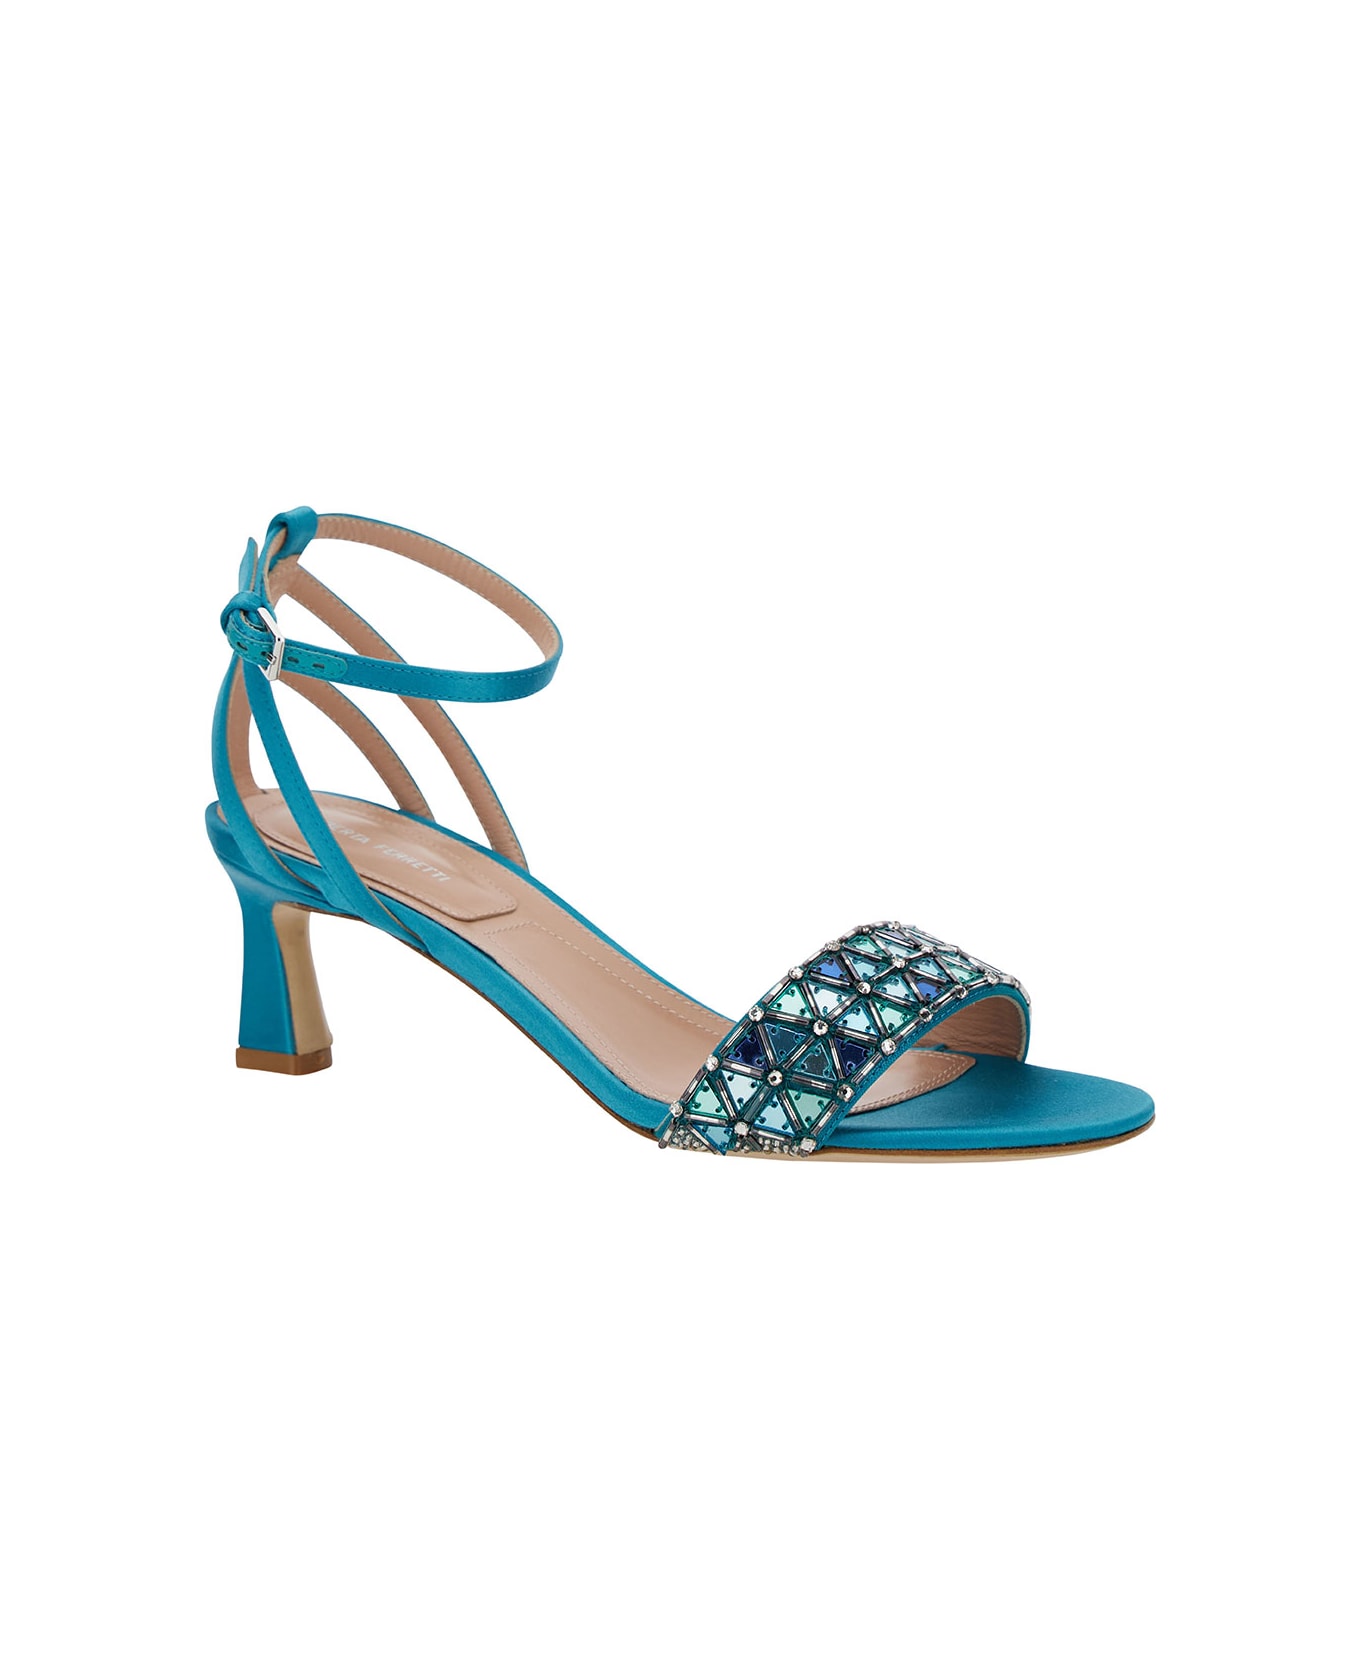 Alberta Ferretti Light Blue Sandals With Mirror-like Details In Leather Woman - Light blue サンダル